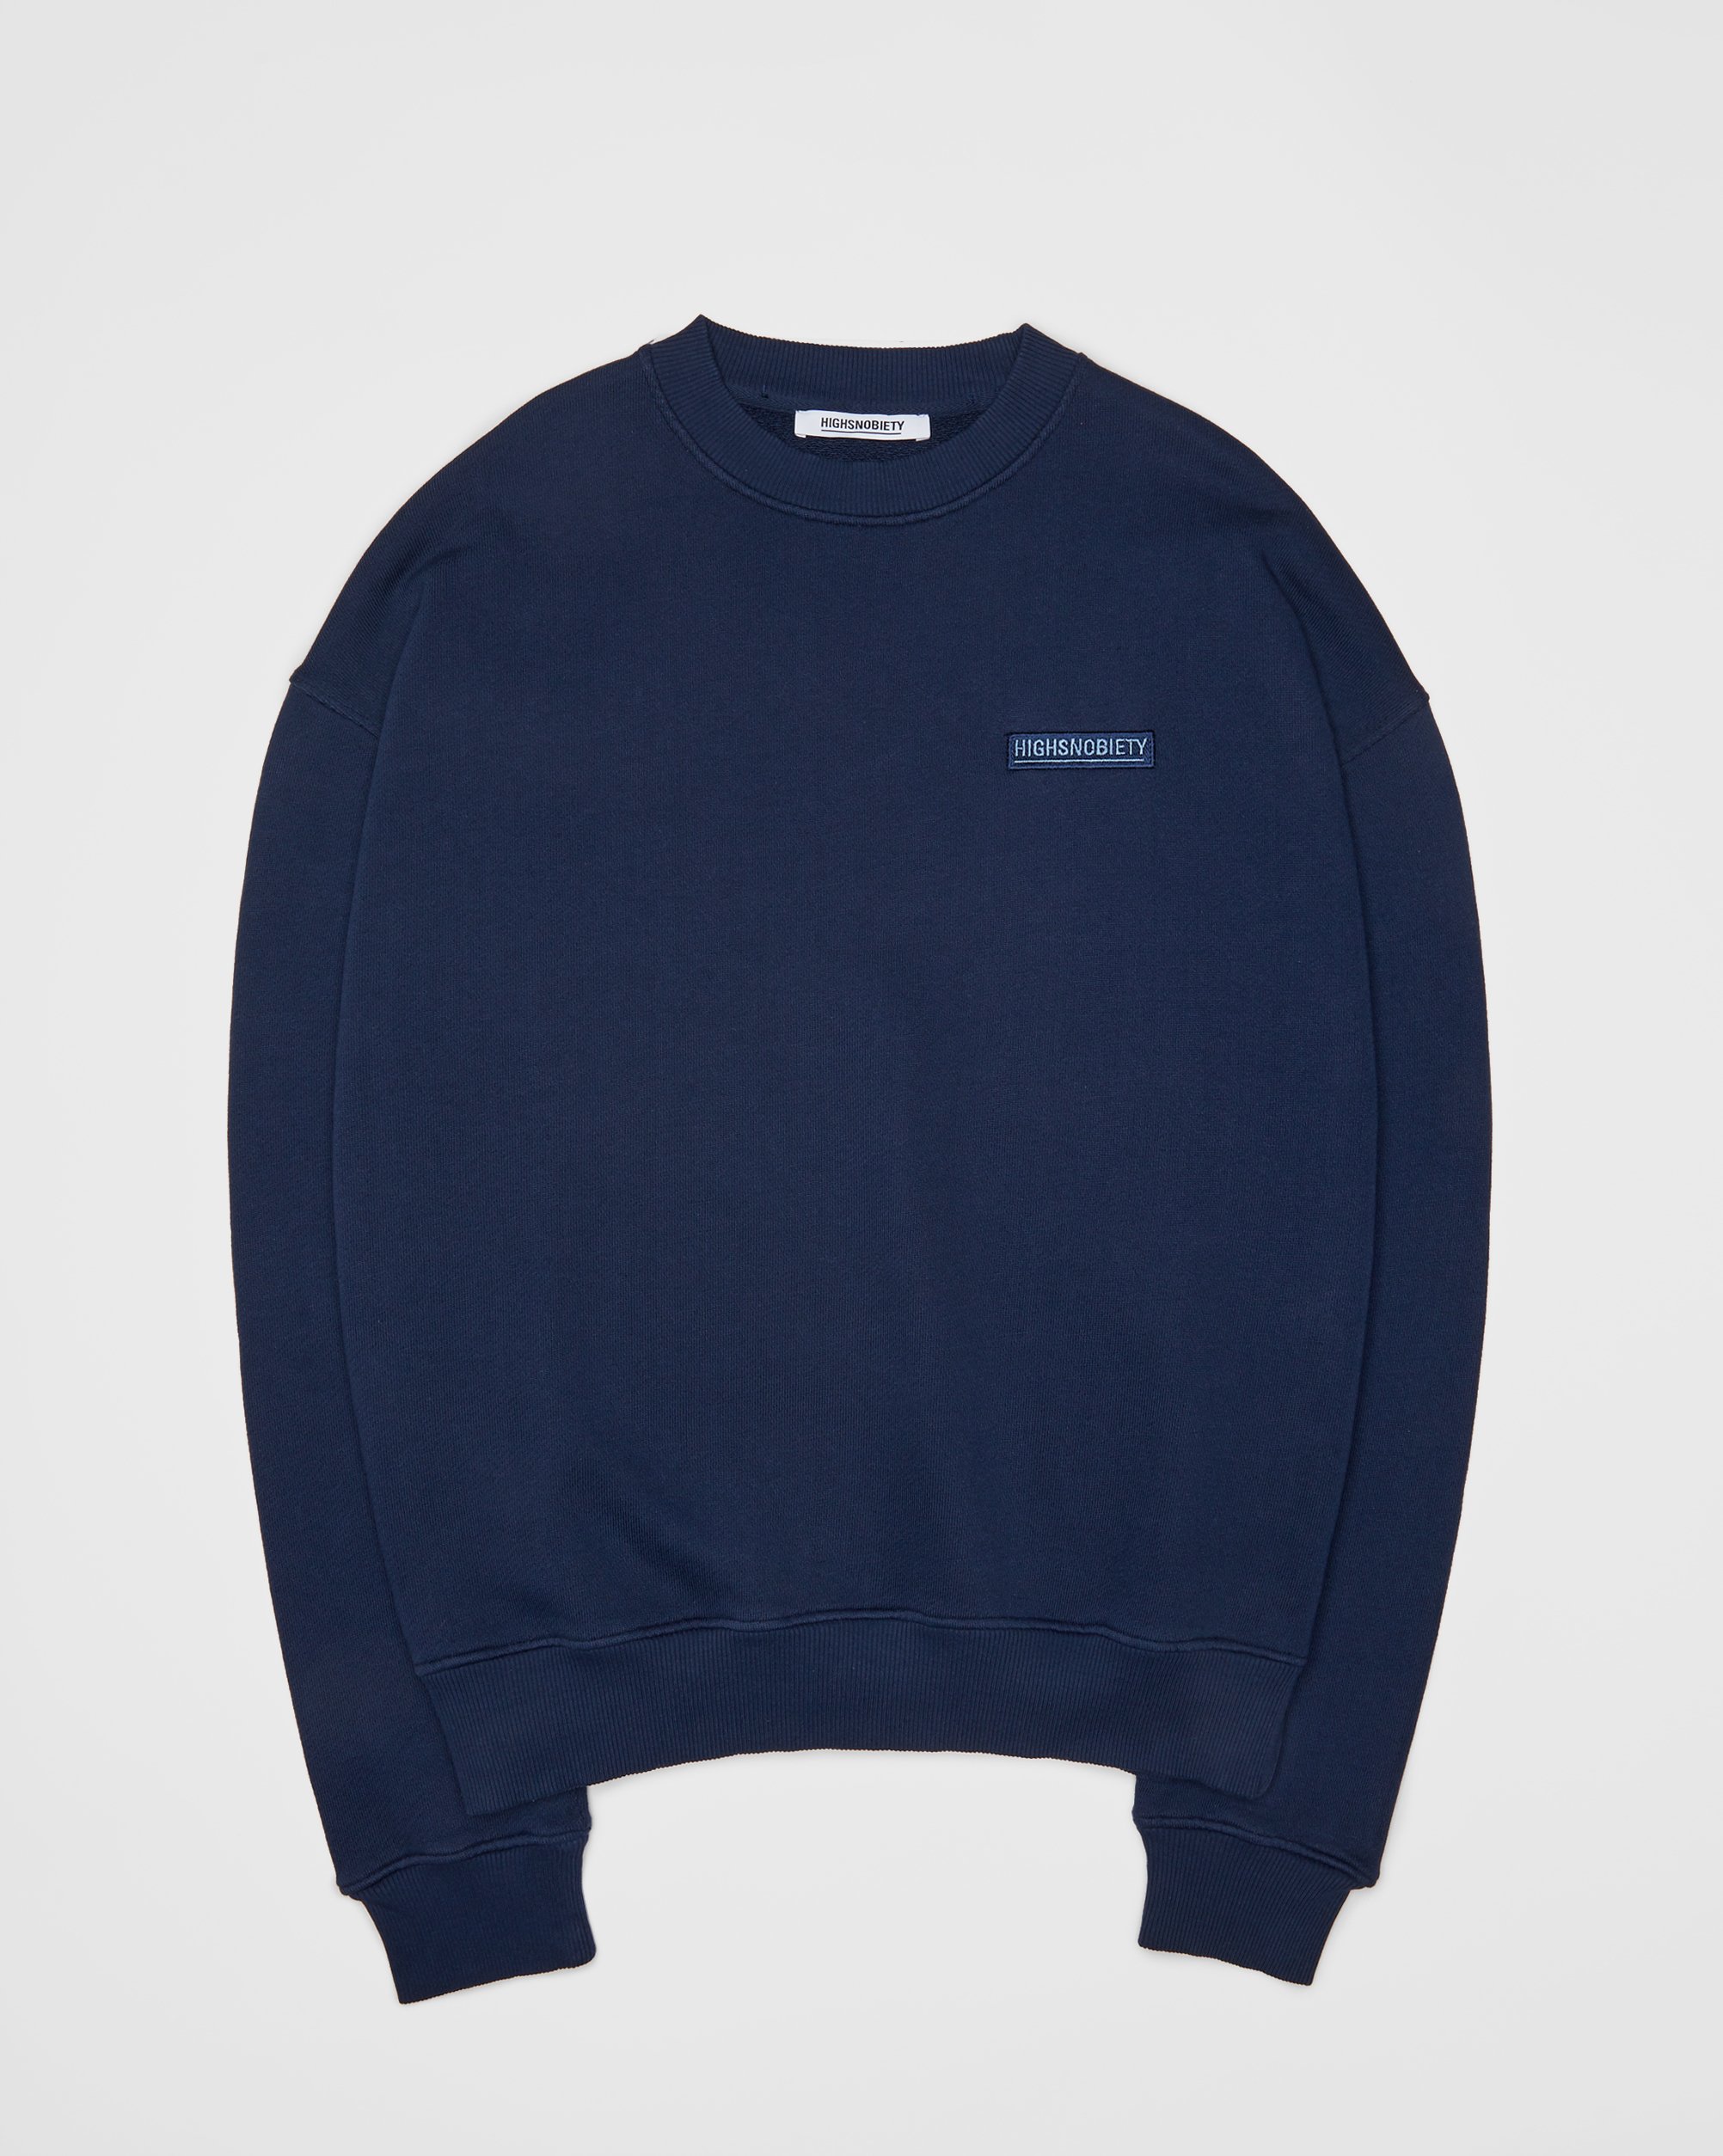 Highsnobiety - Staples Sweatshirt Navy - Clothing - Blue - Image 1